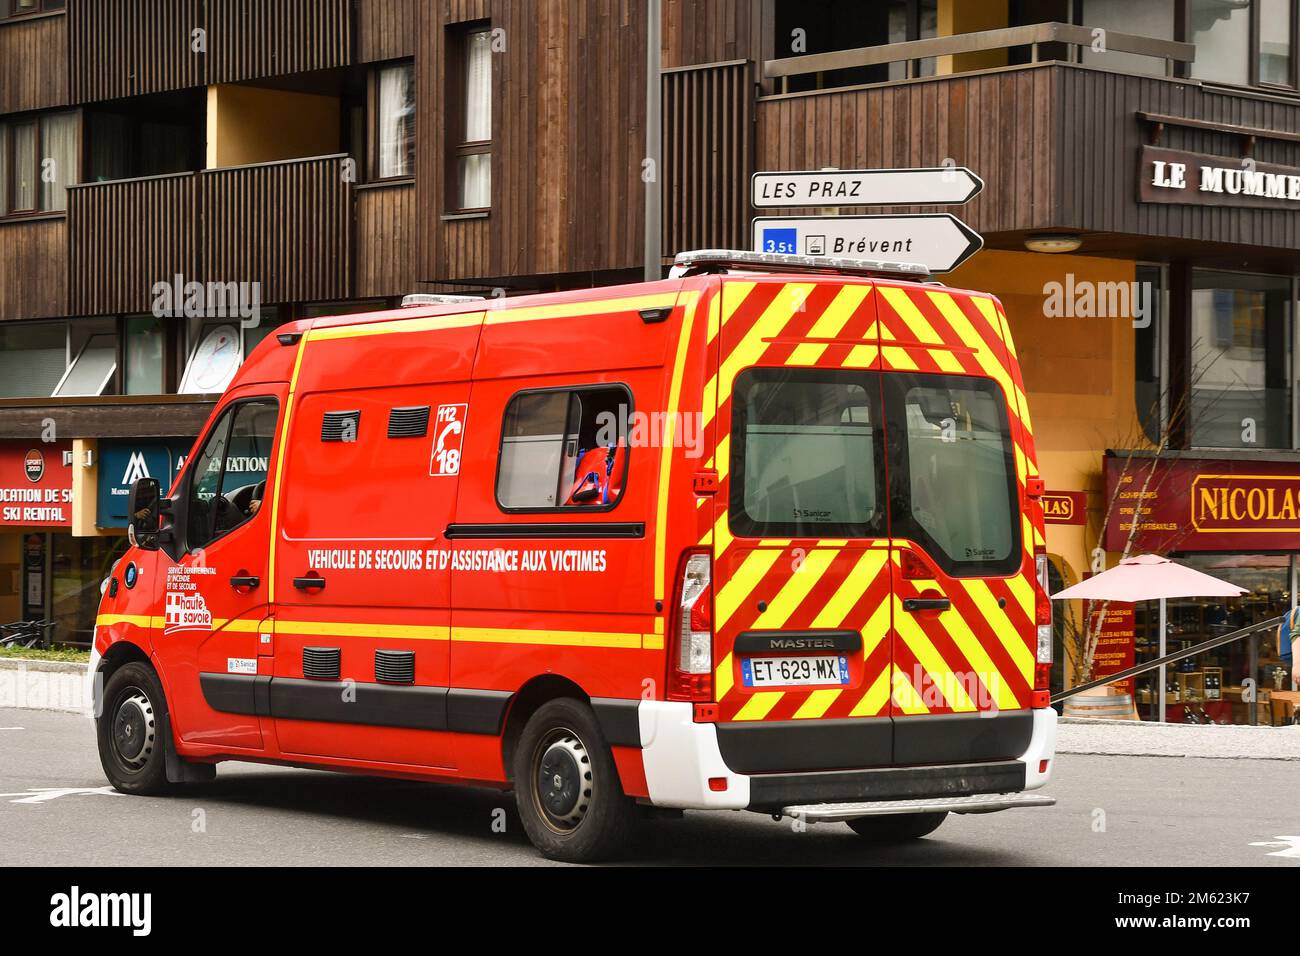 Ambulance van of the fire brigade in the city centre, Chamonix, Haute Savoie, France Stock Photo